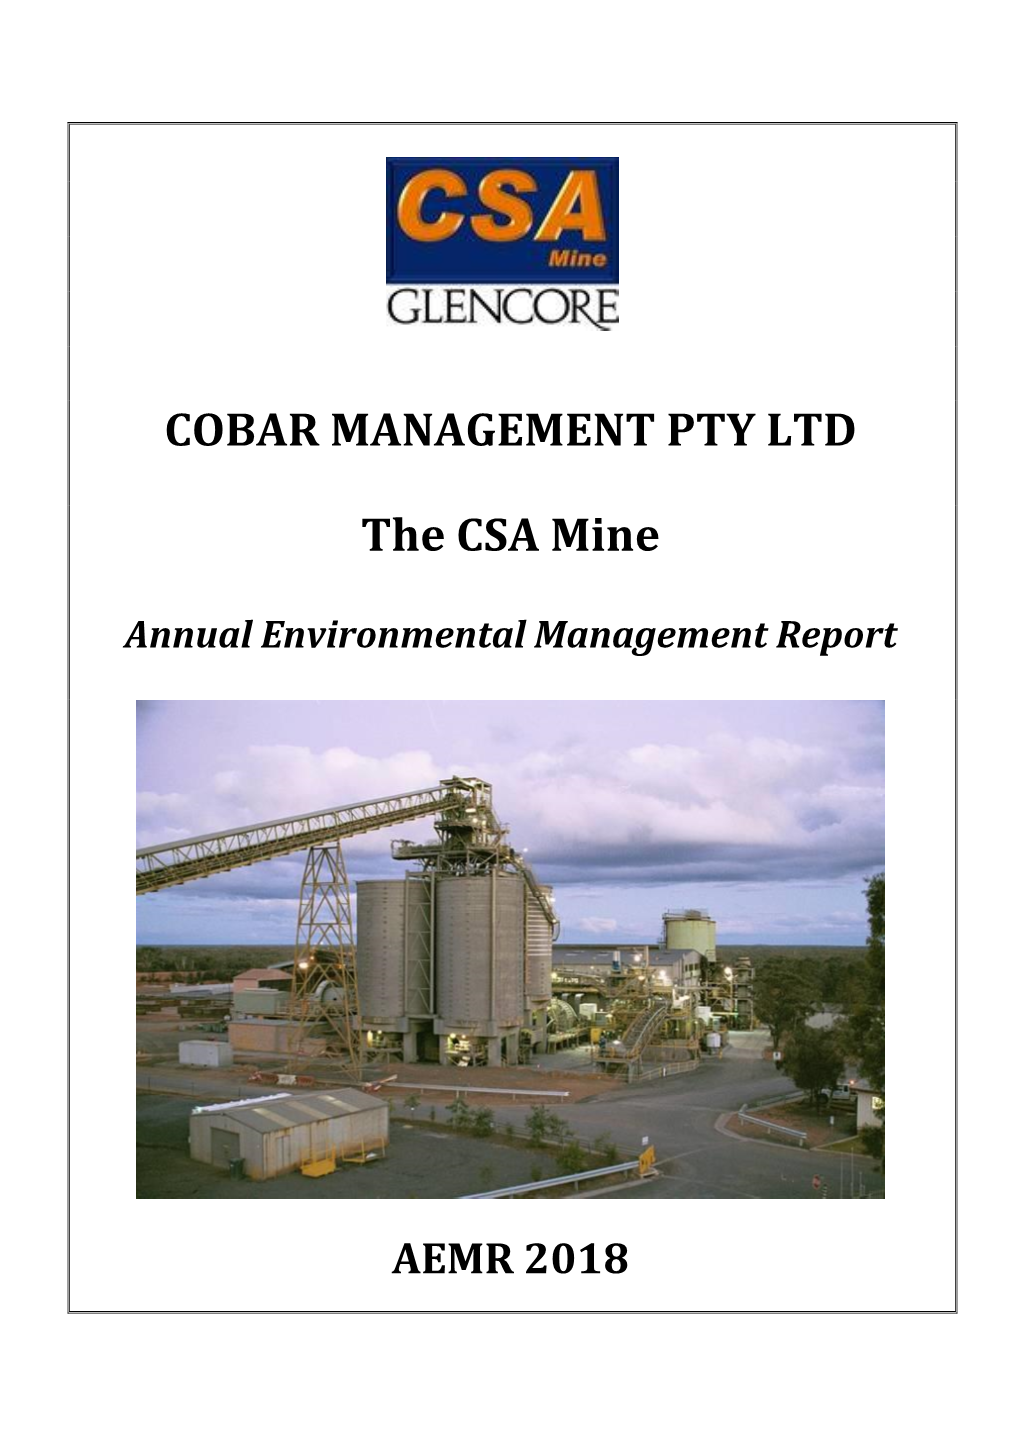 Cobar Management Pty Ltd the CSA Mine Annual Environmental Management Report 2018